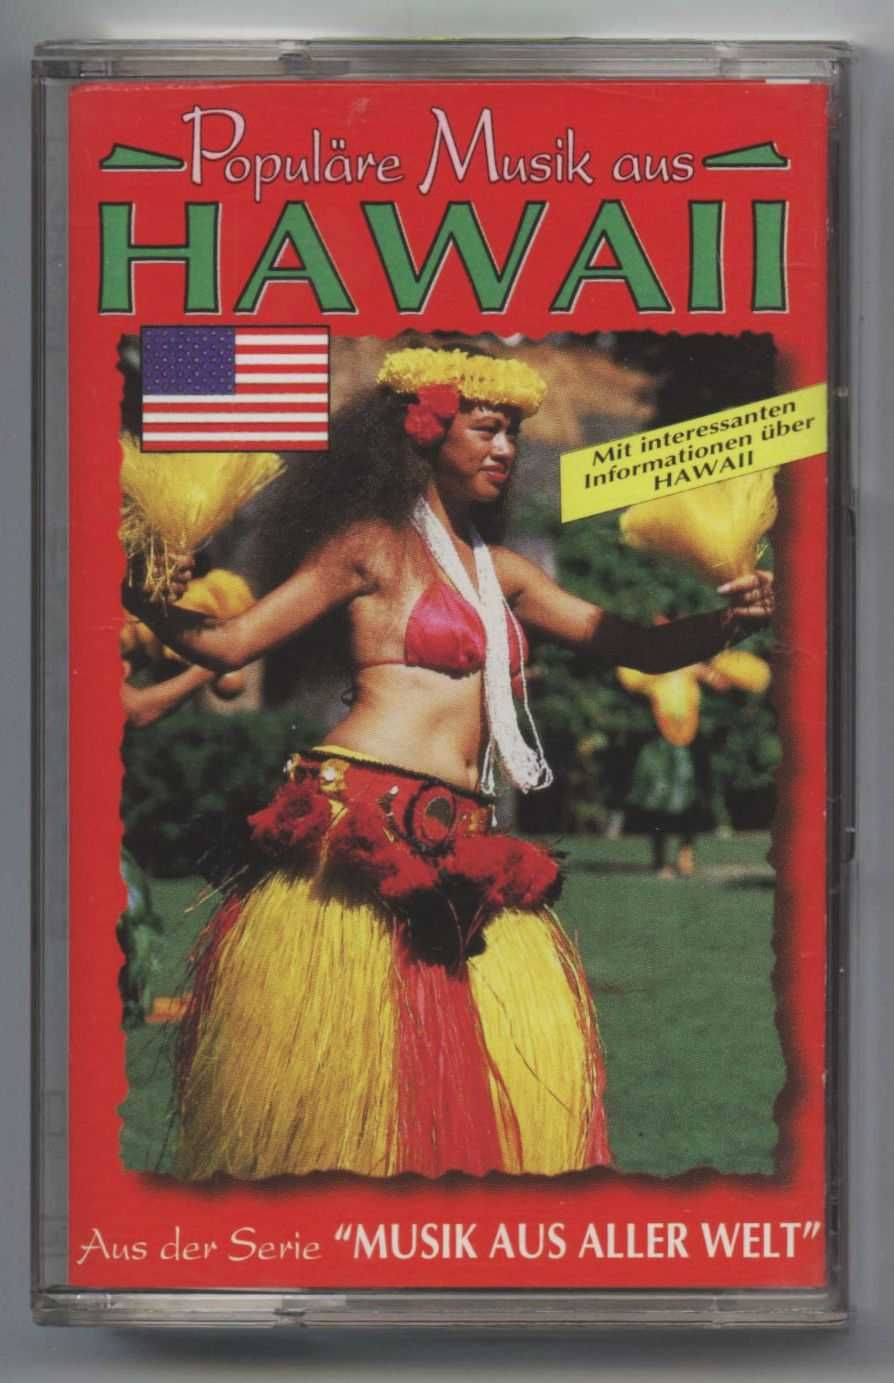 Populare Music aus Hawaii